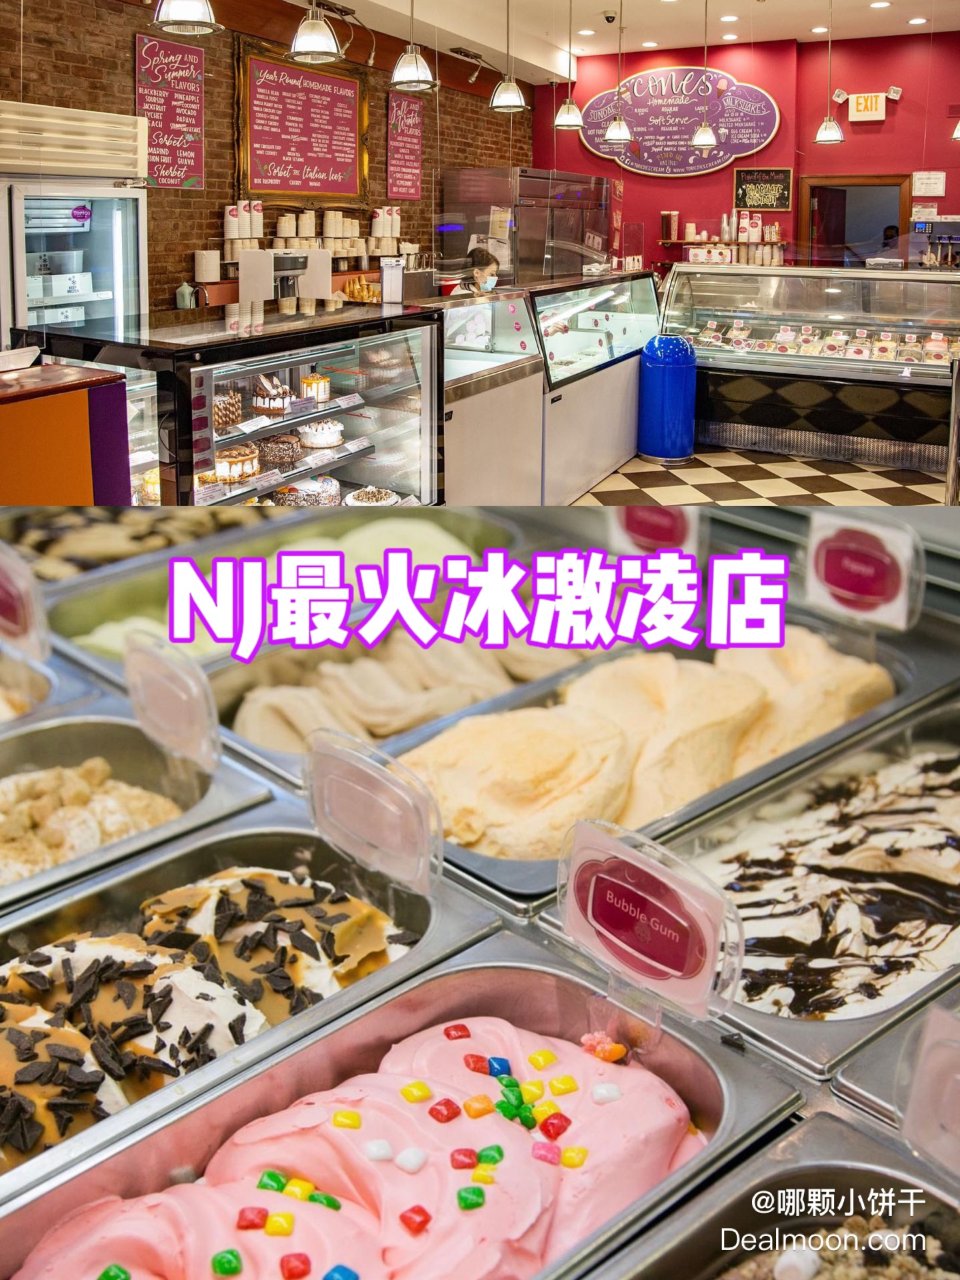 Torico's Homemade Ice Cream Parlor